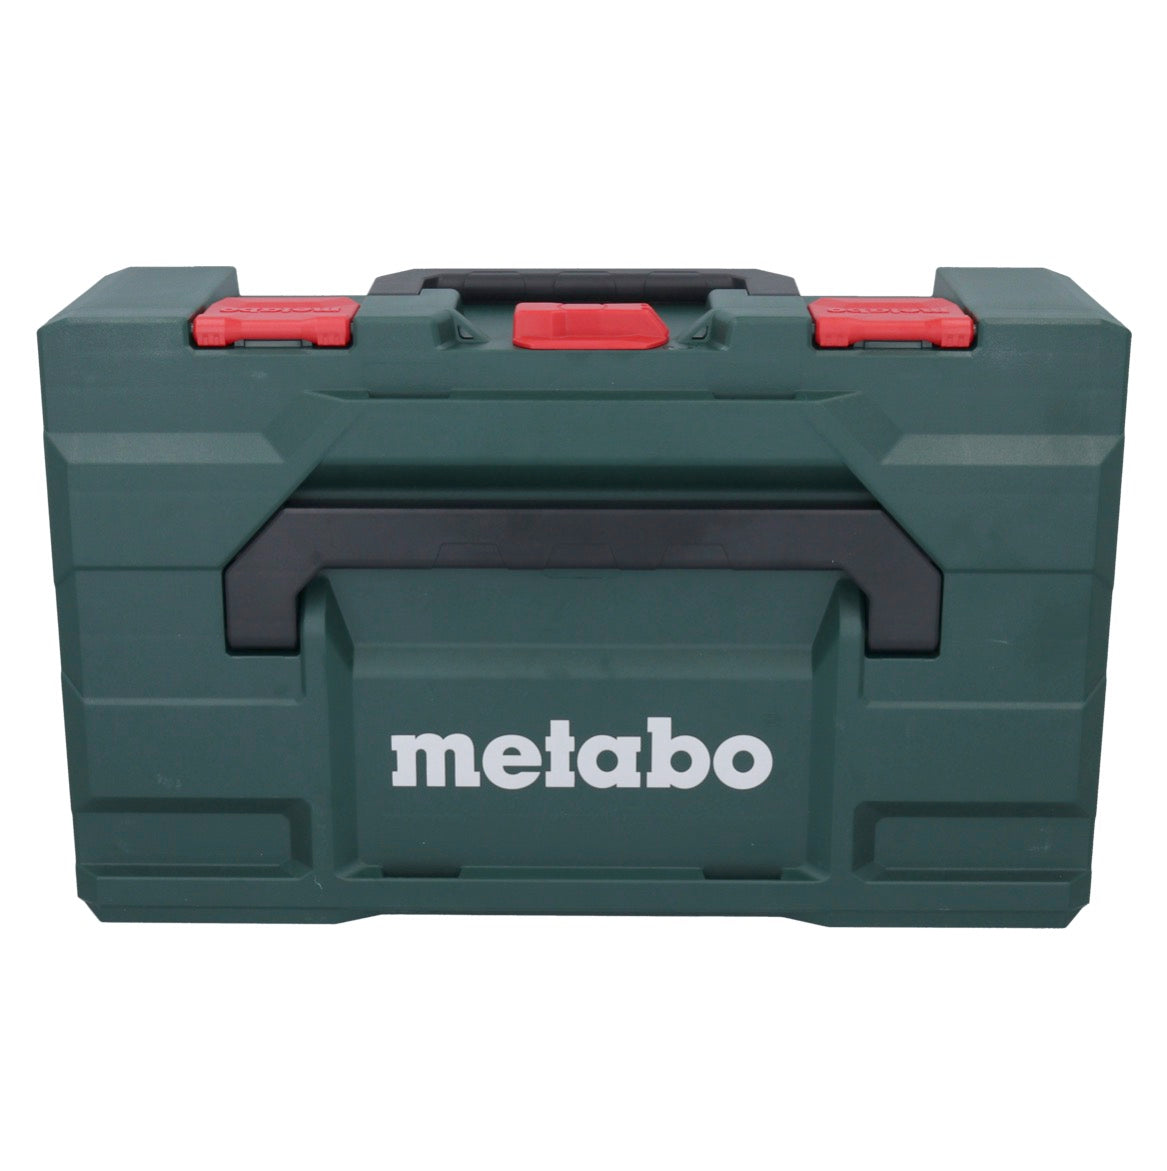 Metabo WPB 18 LT BL 11-125 Quick Akku Winkelschleifer 18 V 125 mm Brushless + 1x Akku 5,5 Ah + Ladegerät + metaBOX - Toolbrothers